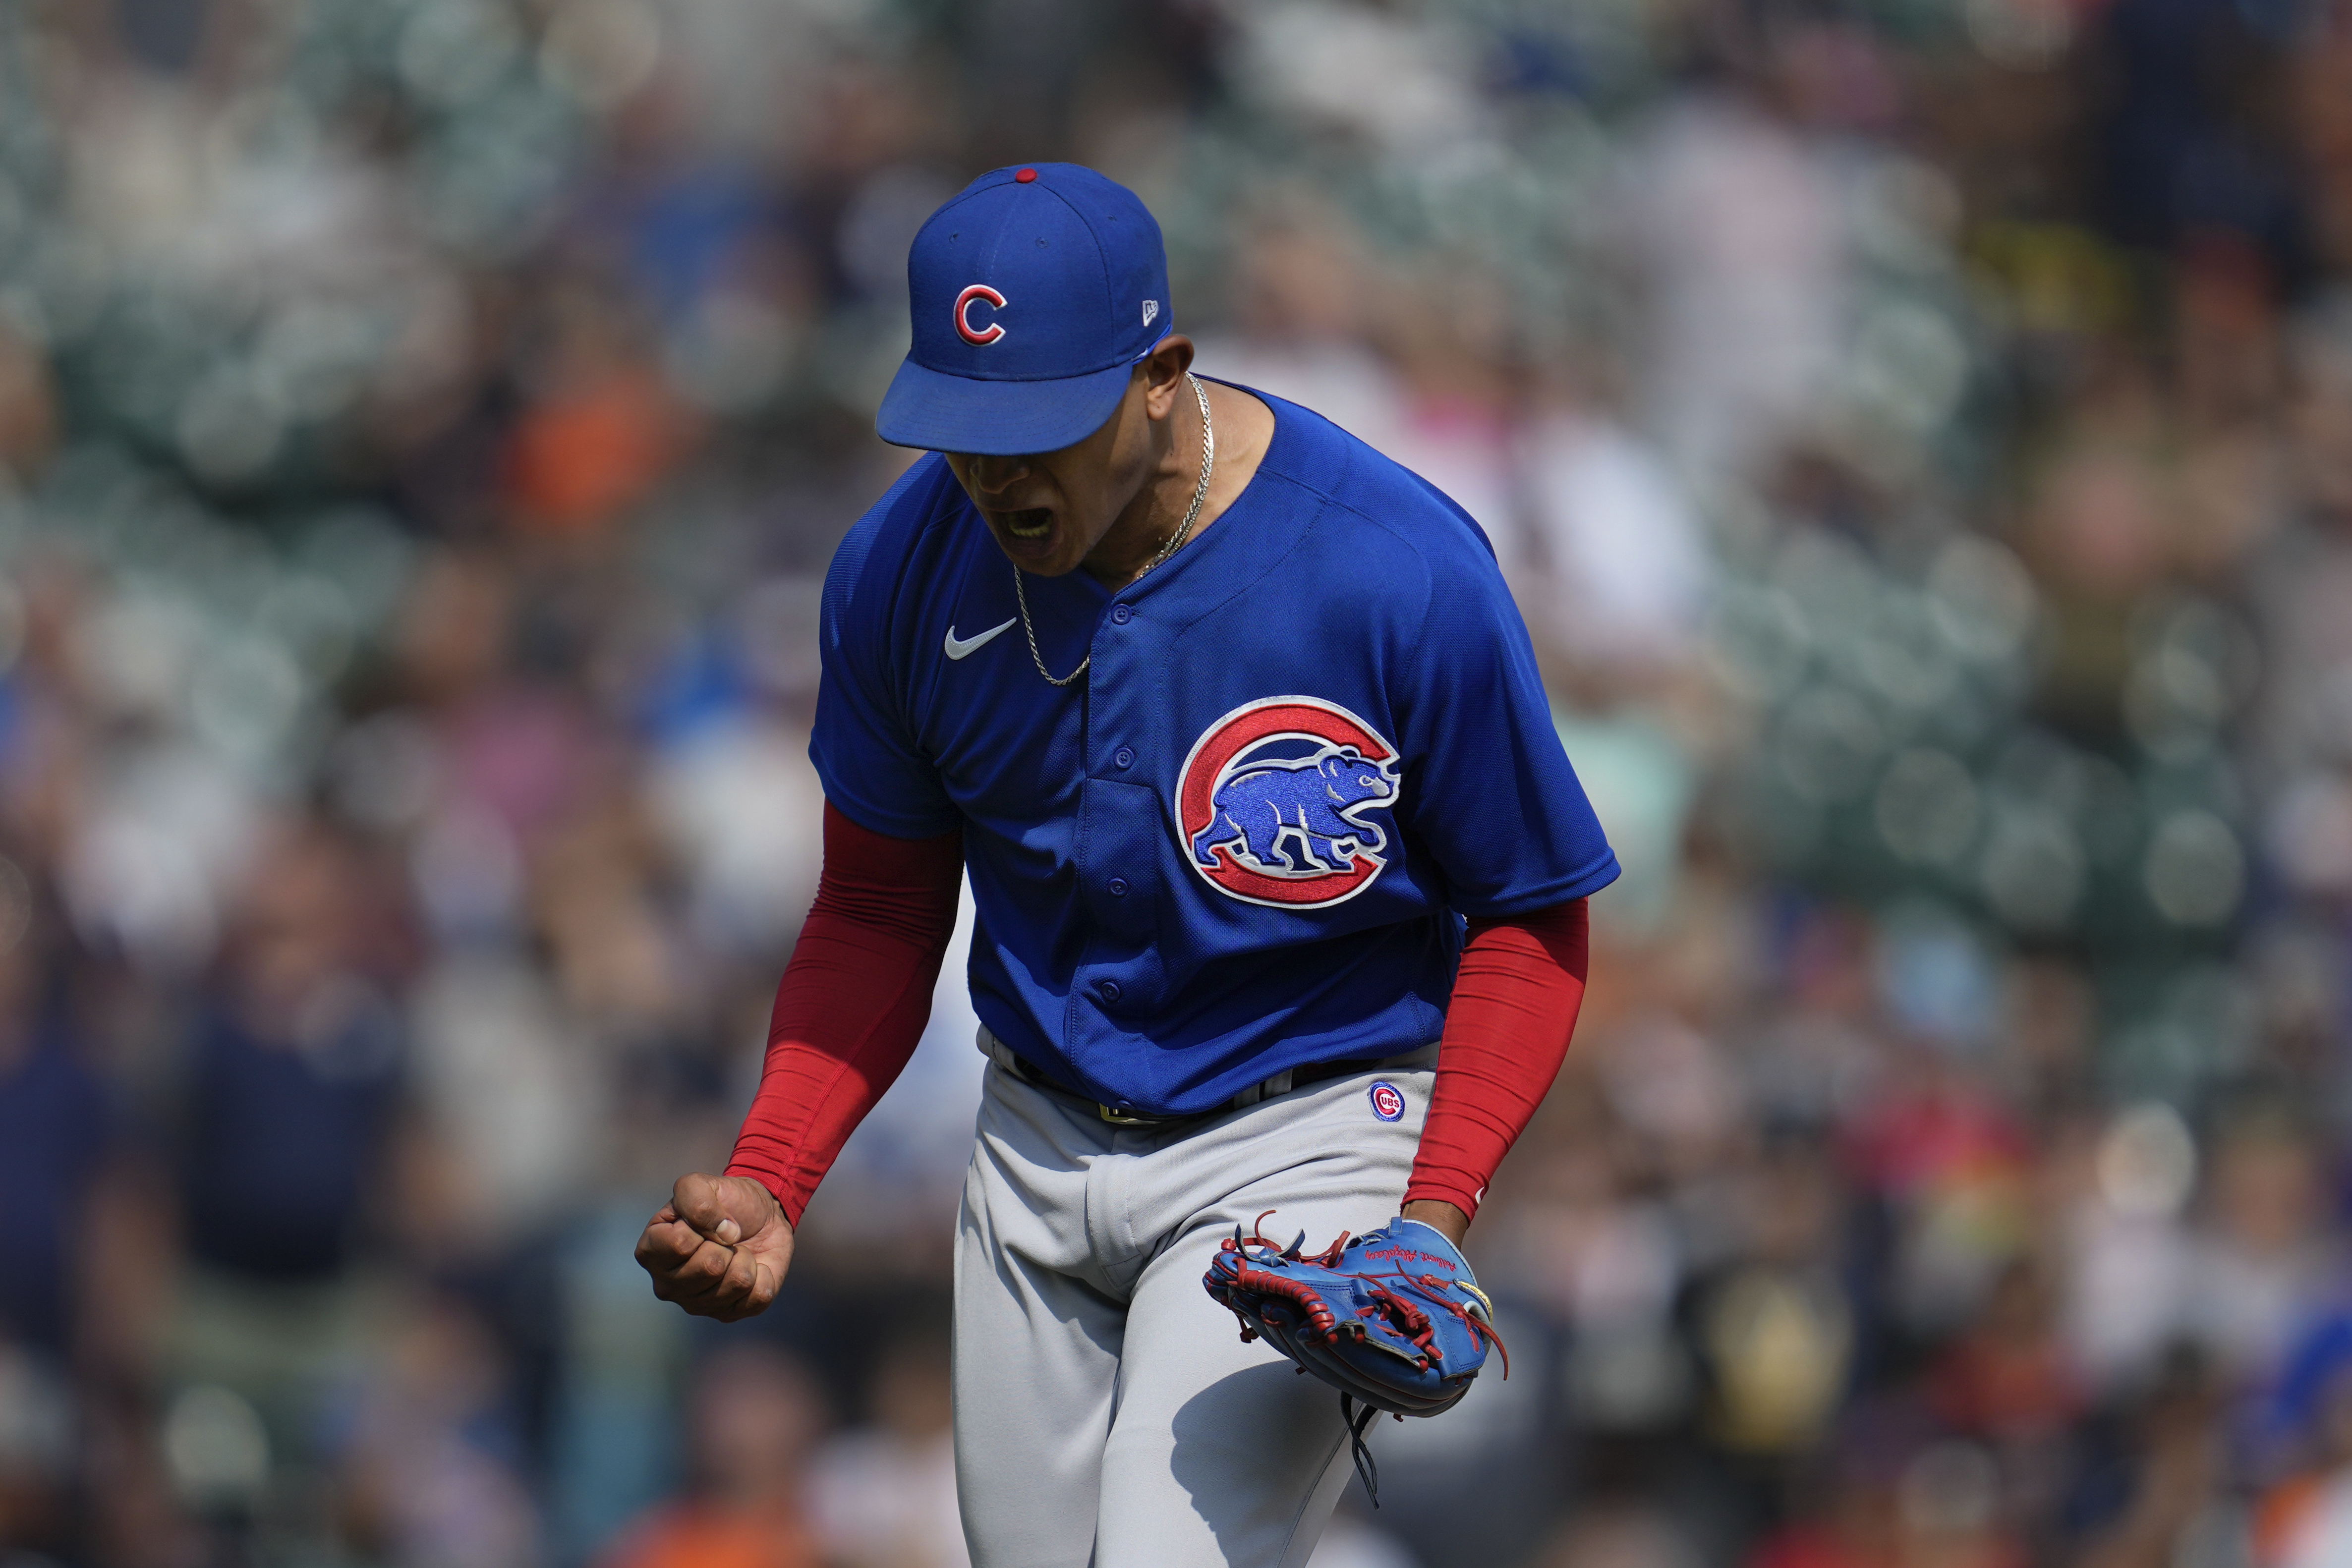 Christopher Morel walk-off home run caps wild Cubs comeback